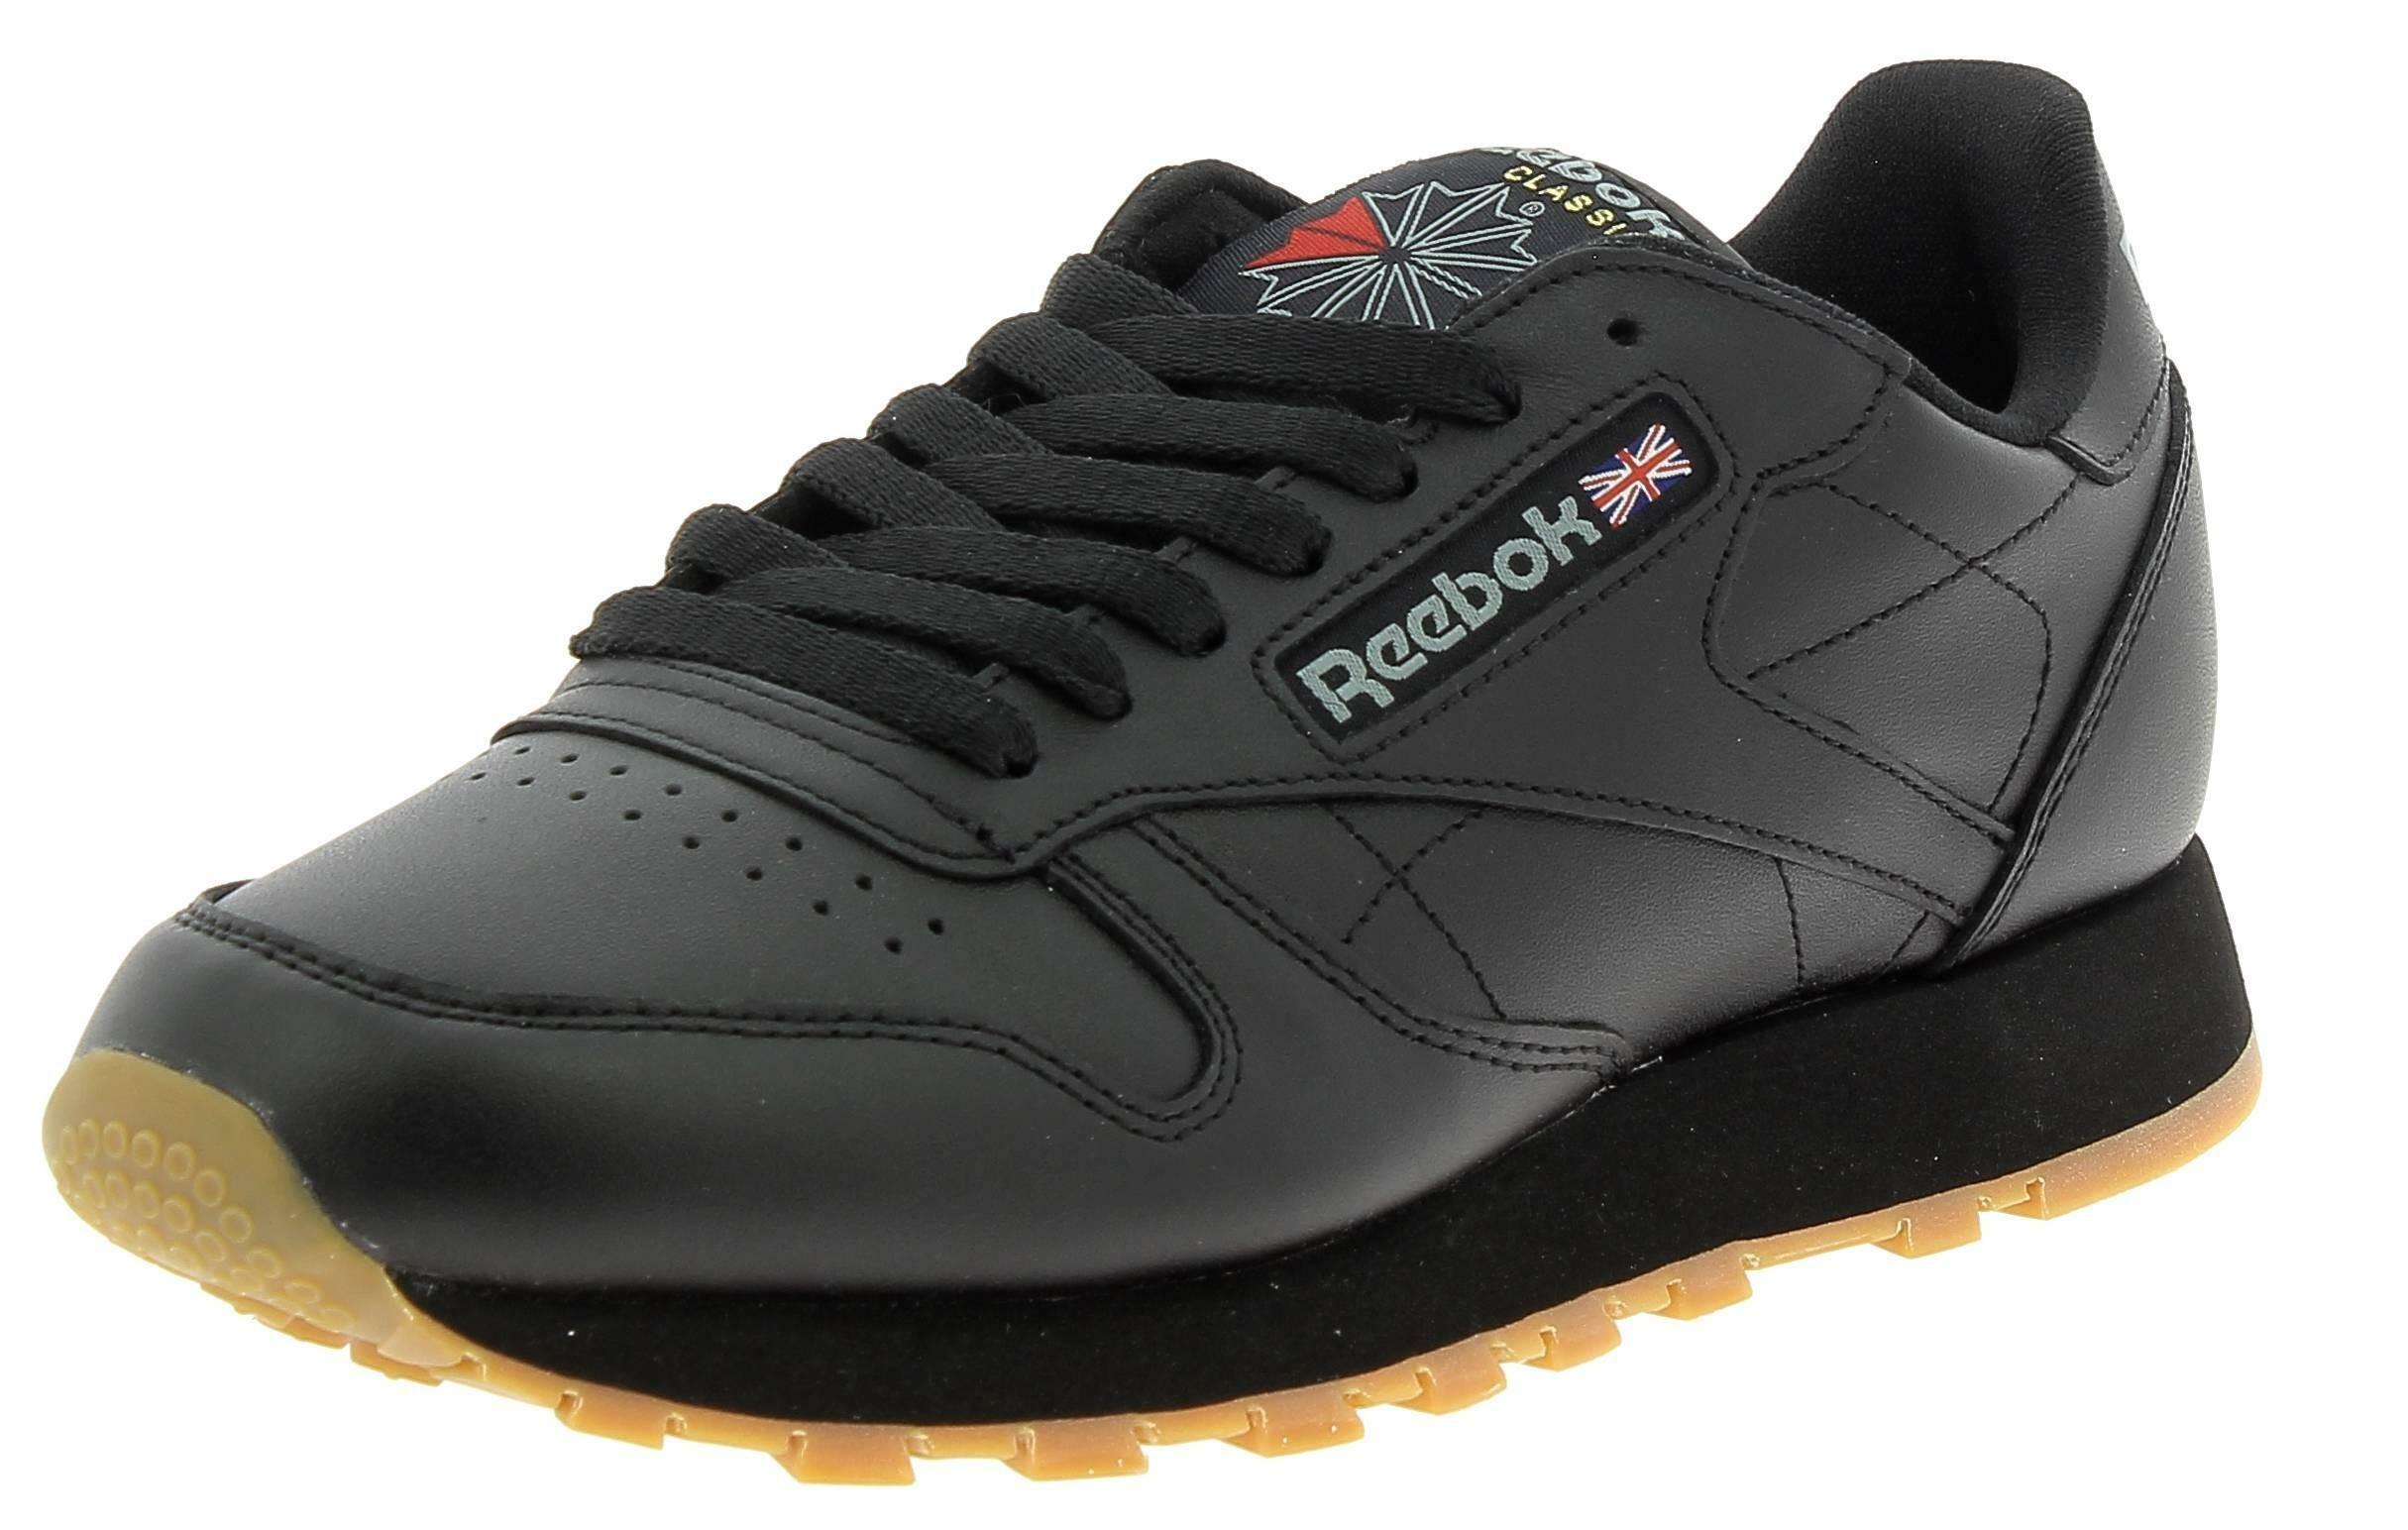 Reebok classic leather scarpe sportive uomo nere